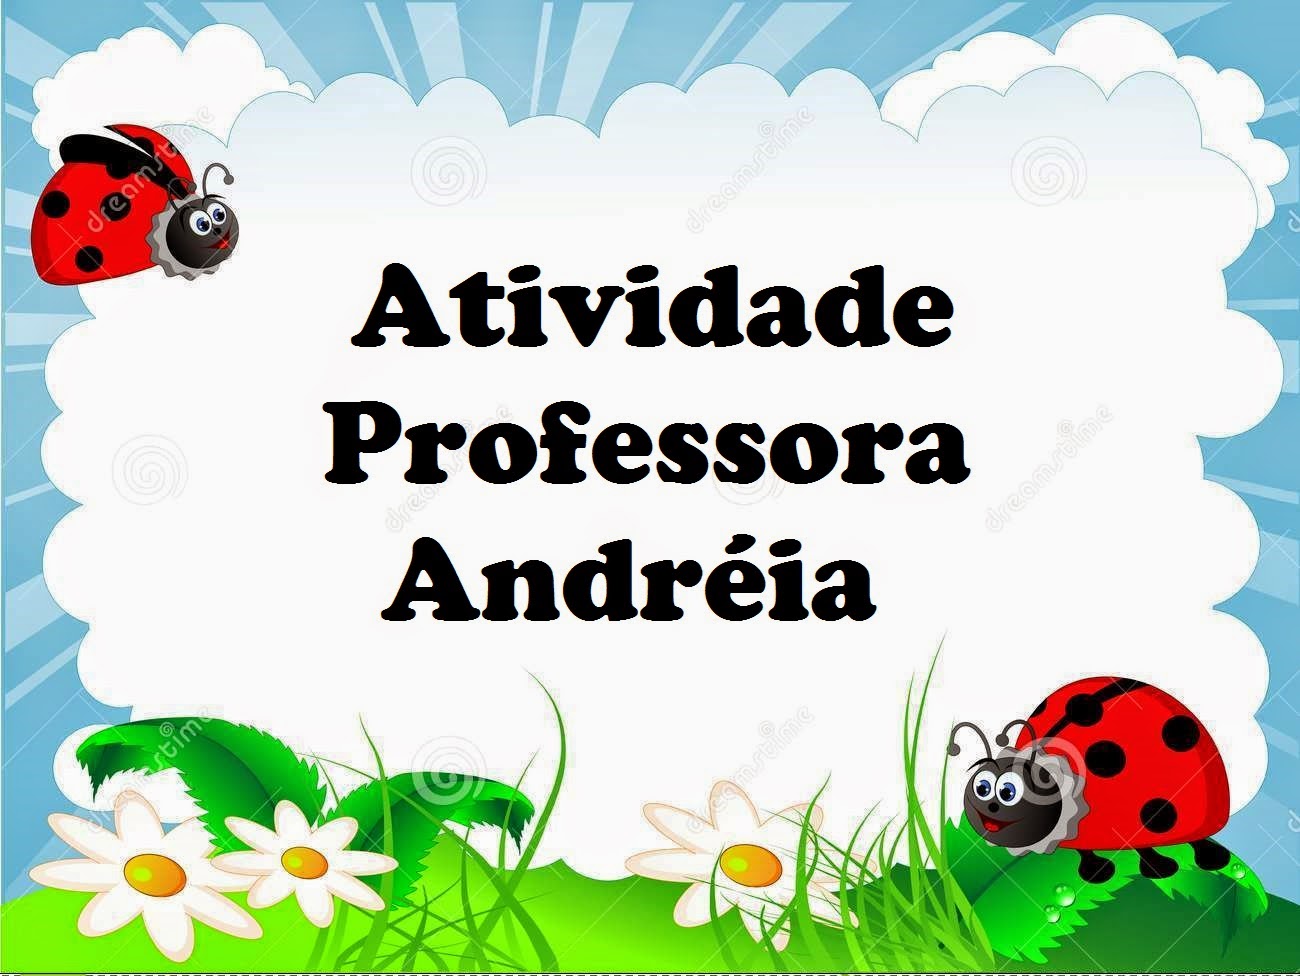 http://www.sol.eti.br/a/portugues/interpretacao_texto_joaninha.php